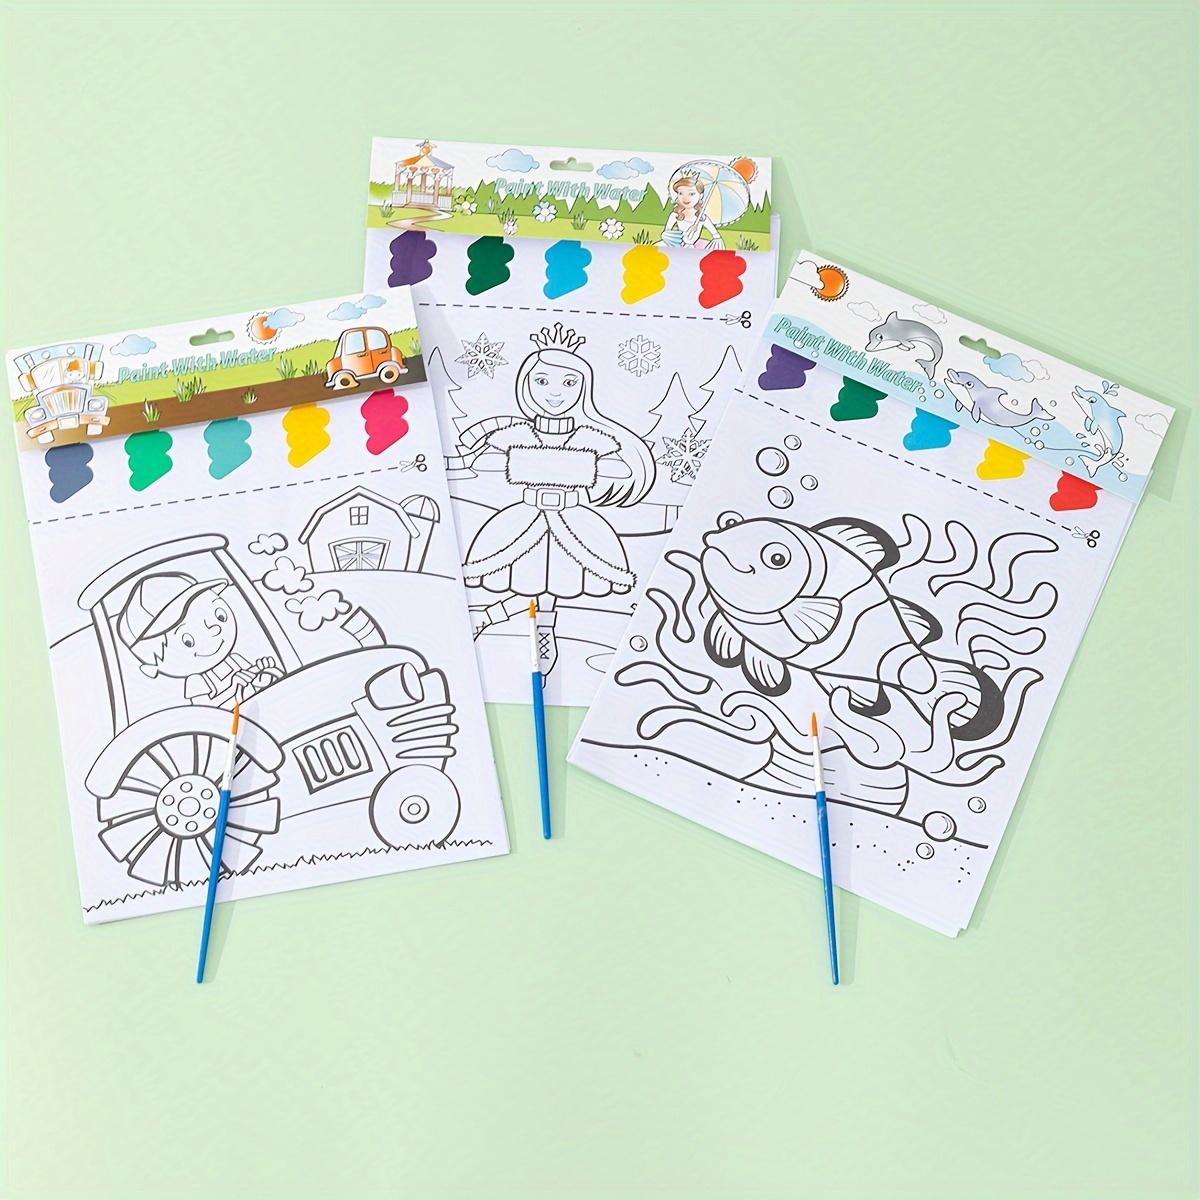  MITCIEN Pocket Watercolor Painting Book, Travel Pocket  Watercolor Kit, Watercolor Paint Bookmark, Pocket Watercolor Book for Kids  : Toys & Games